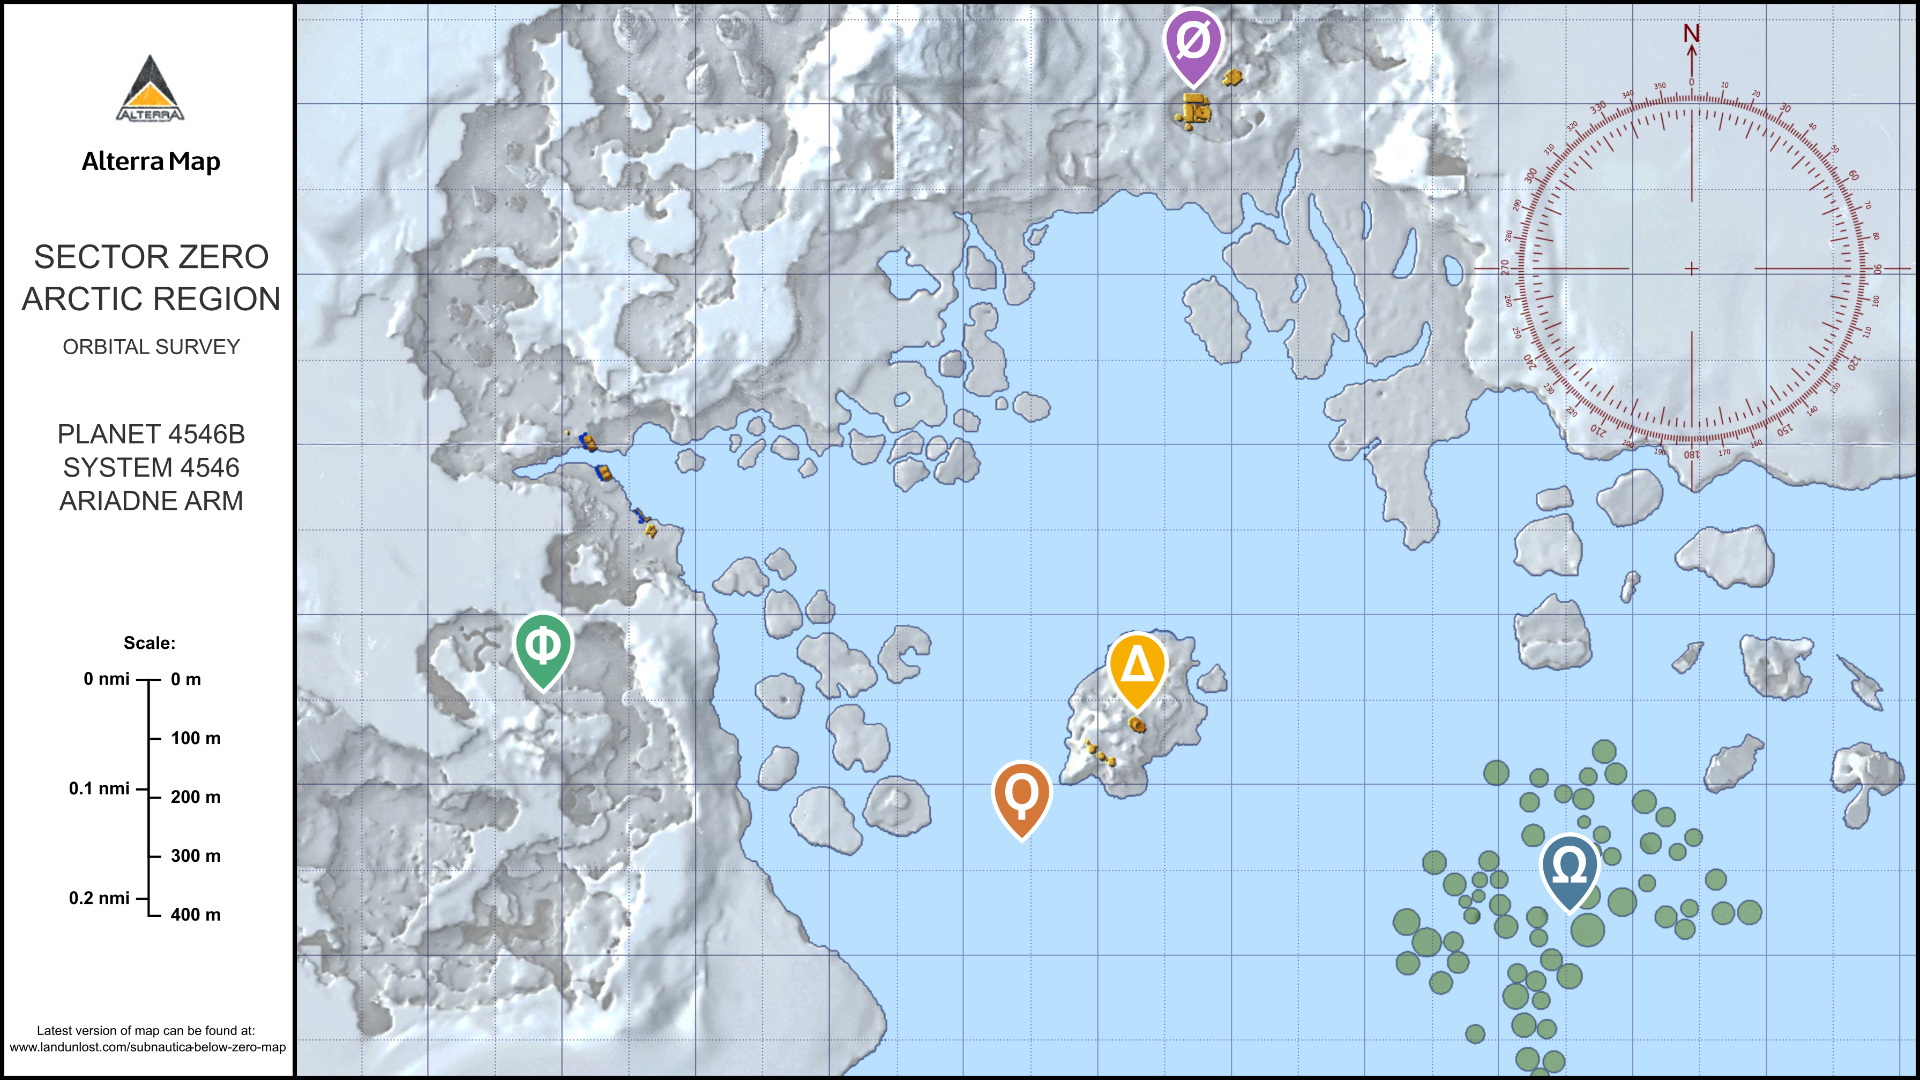 subnautica map interactive